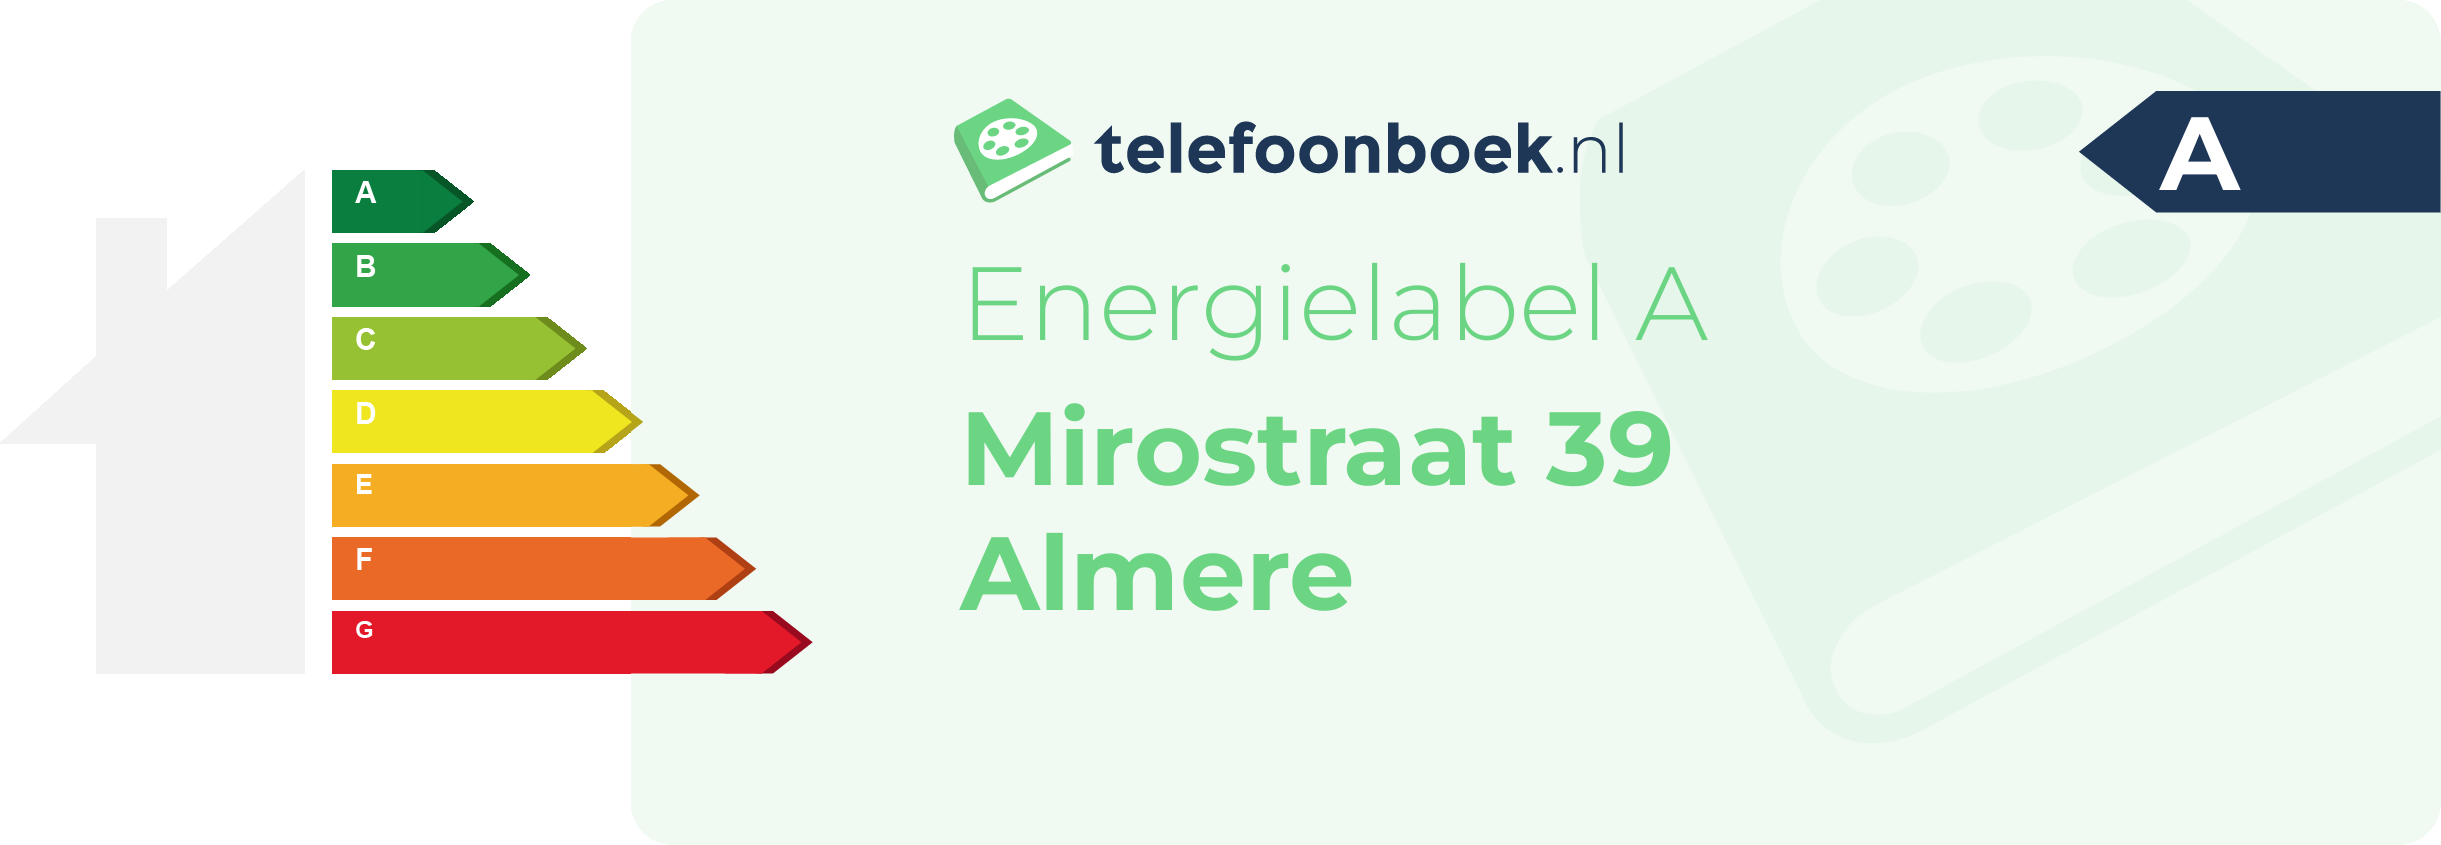 Energielabel Mirostraat 39 Almere